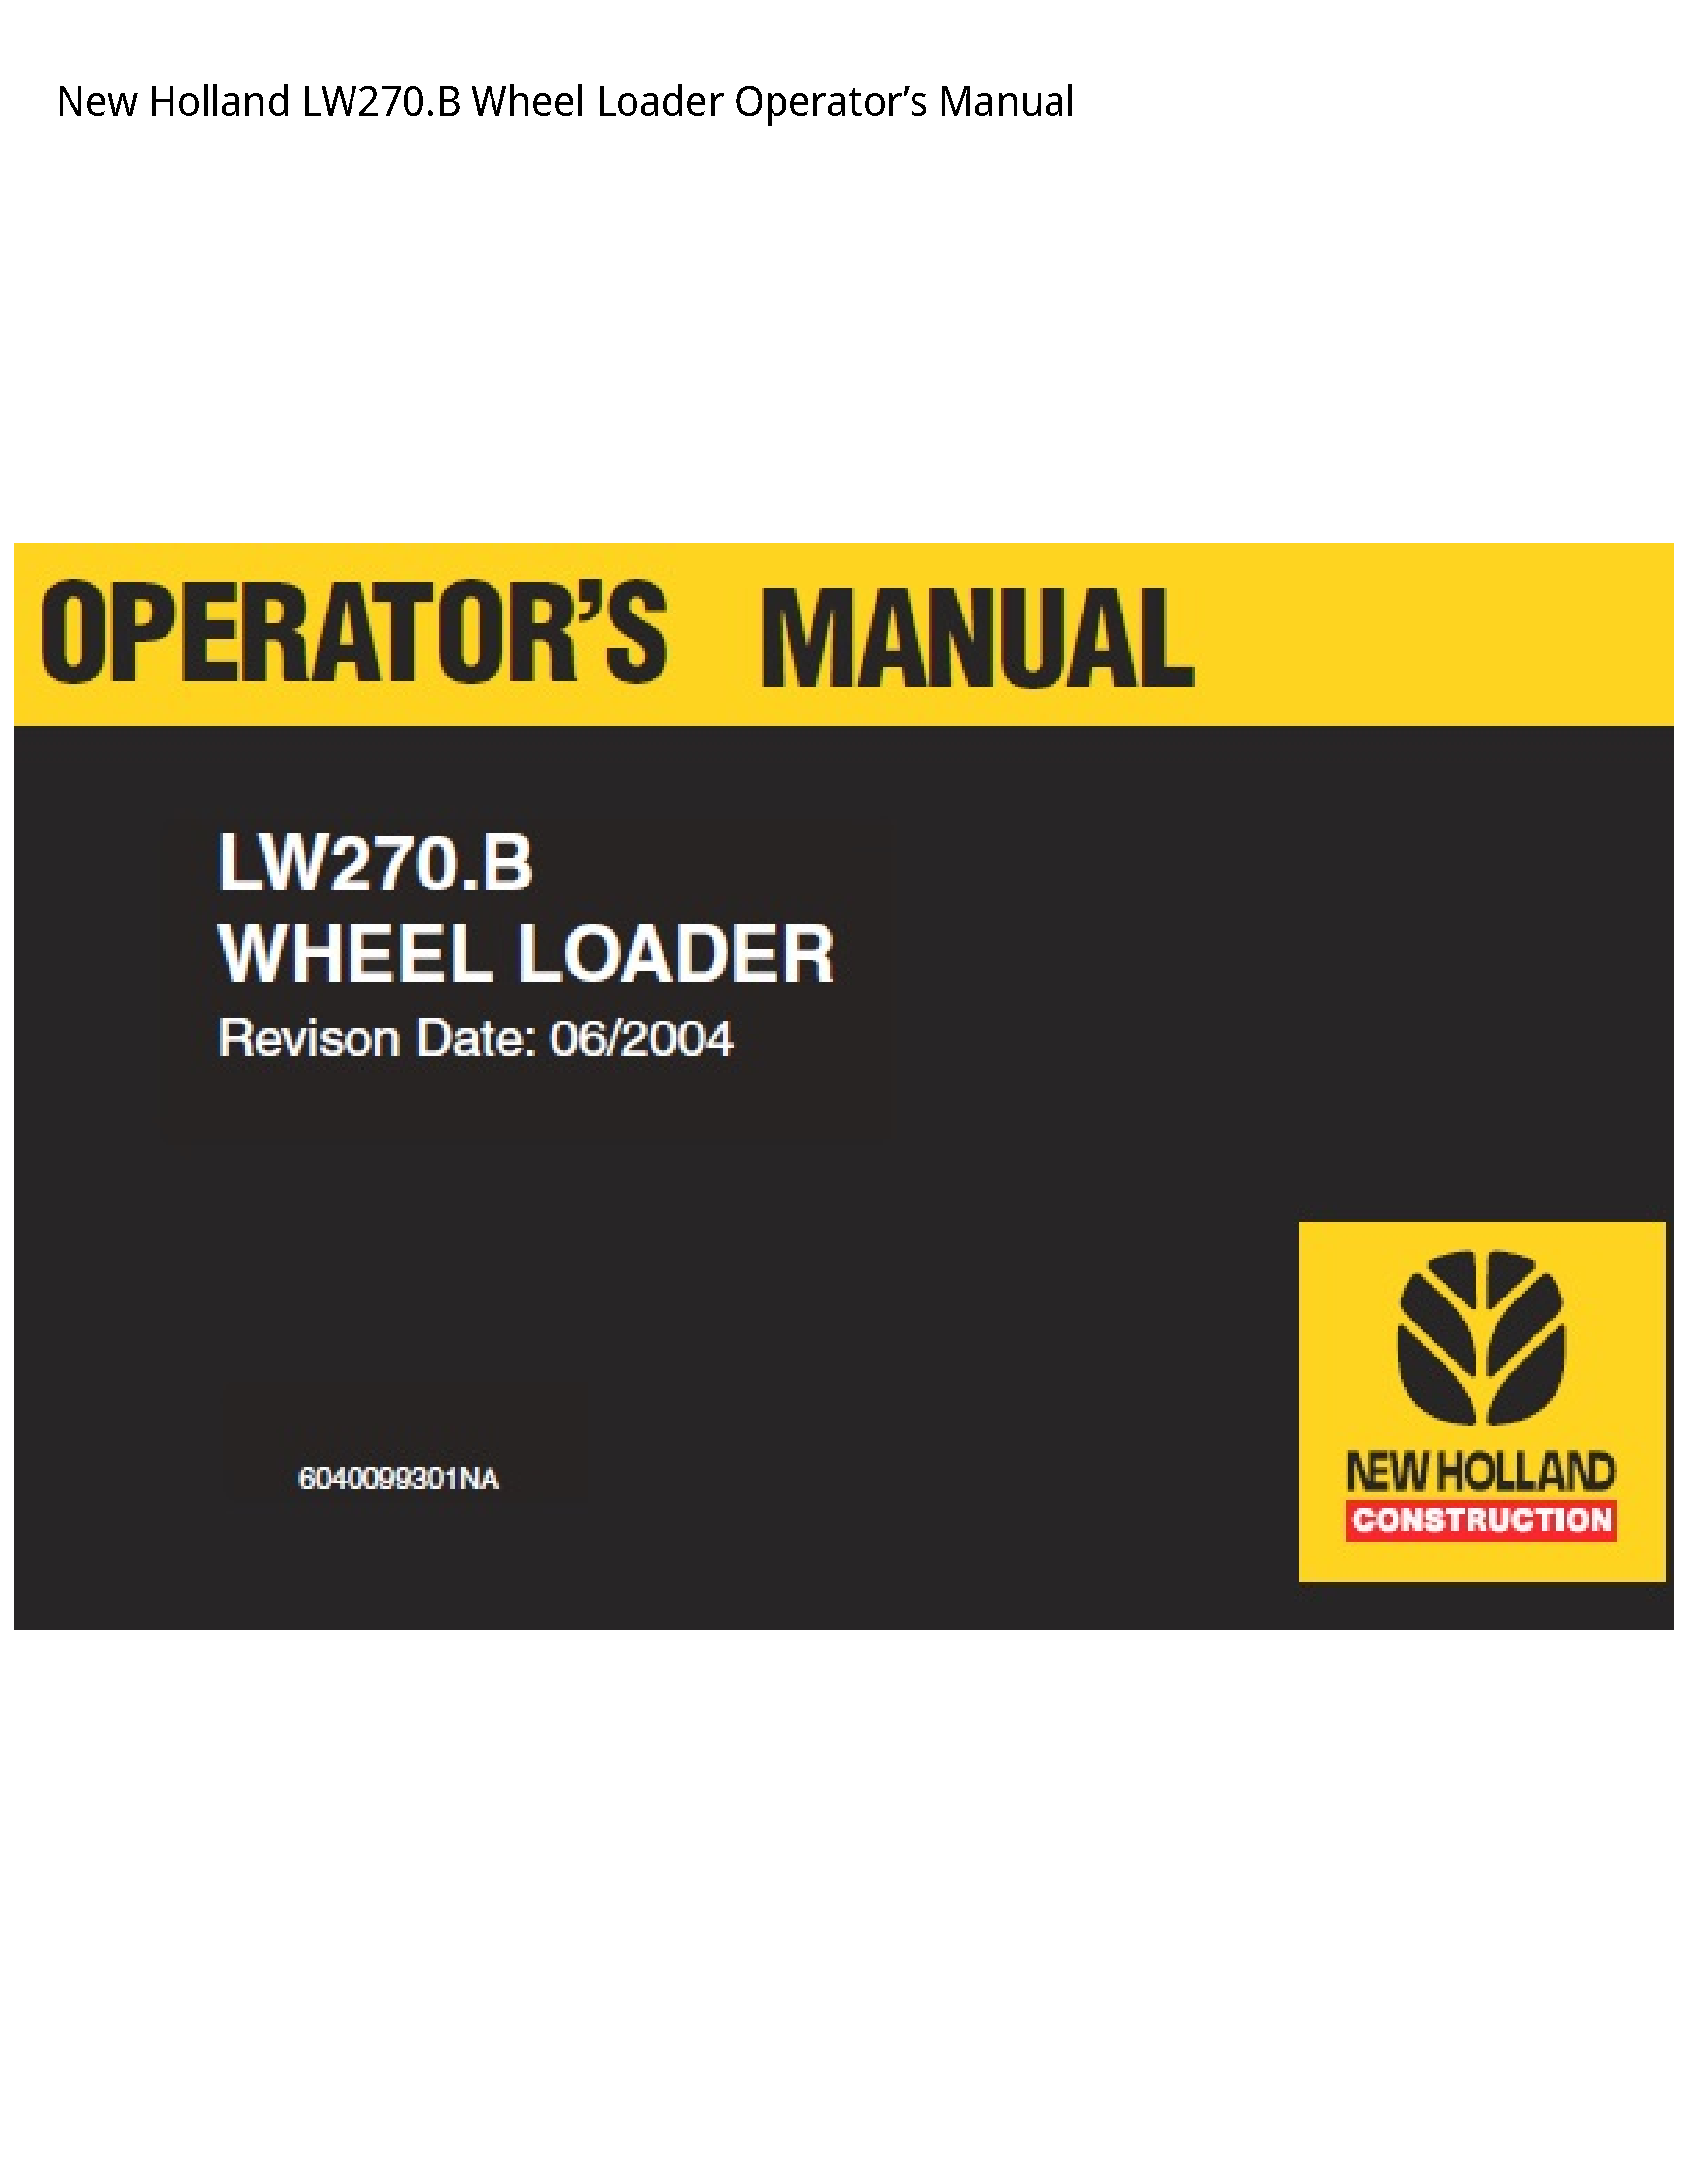 New Holland LW270.B Wheel Loader Operator’s manual